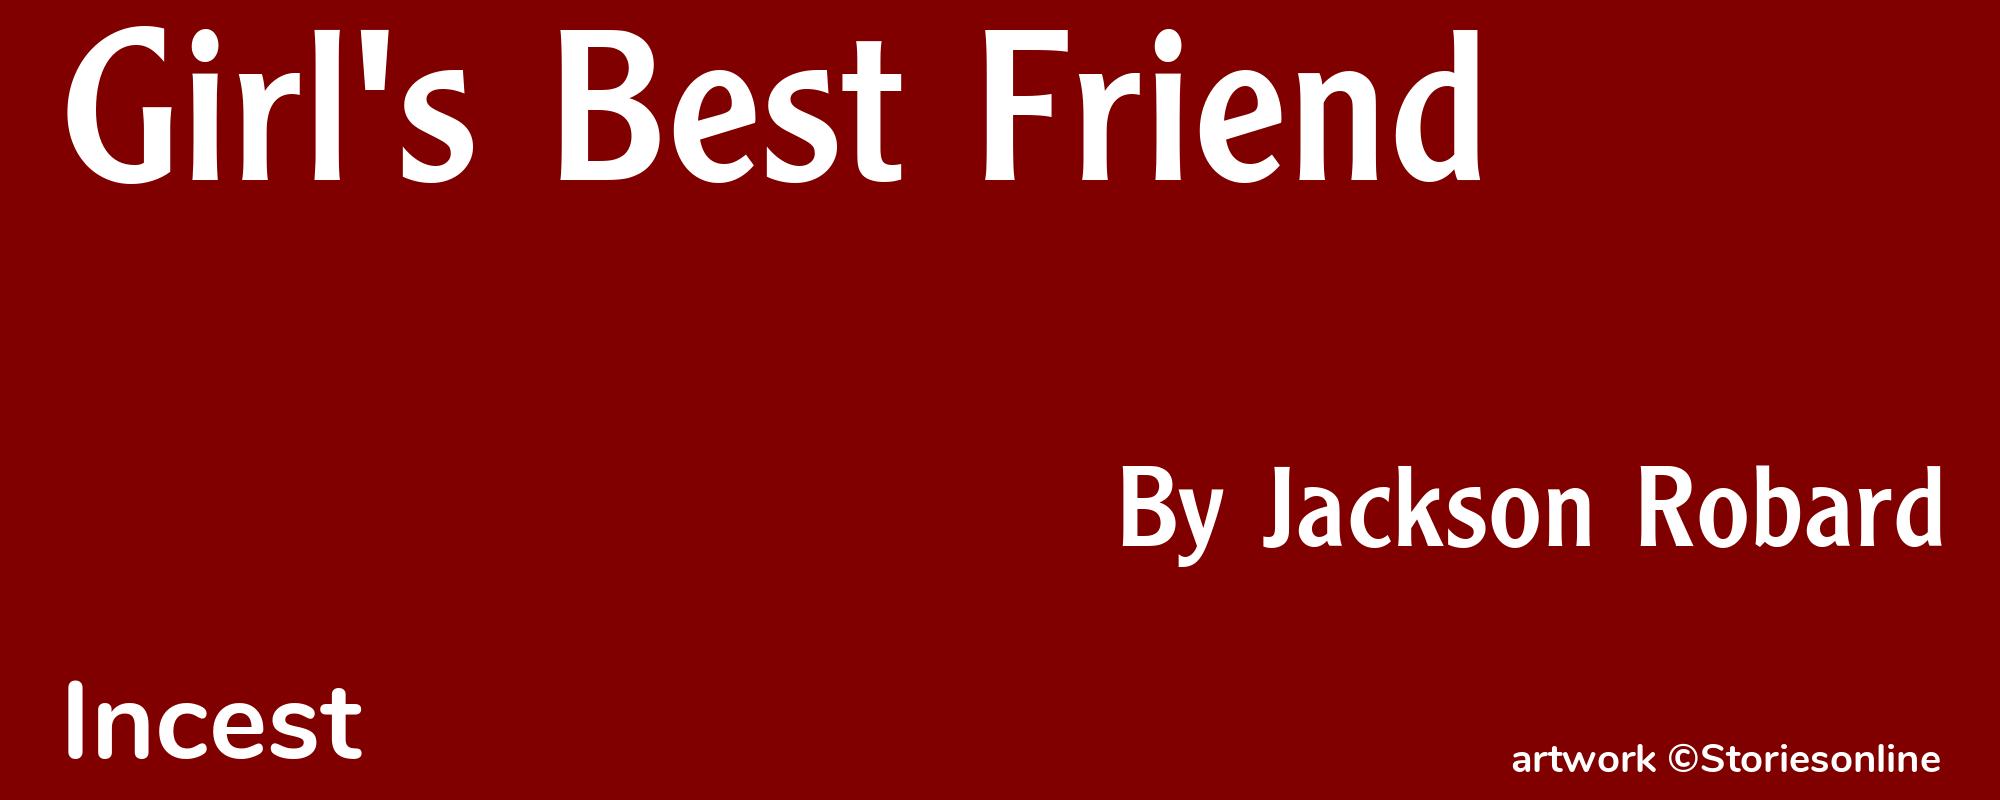 Girl's Best Friend - Cover